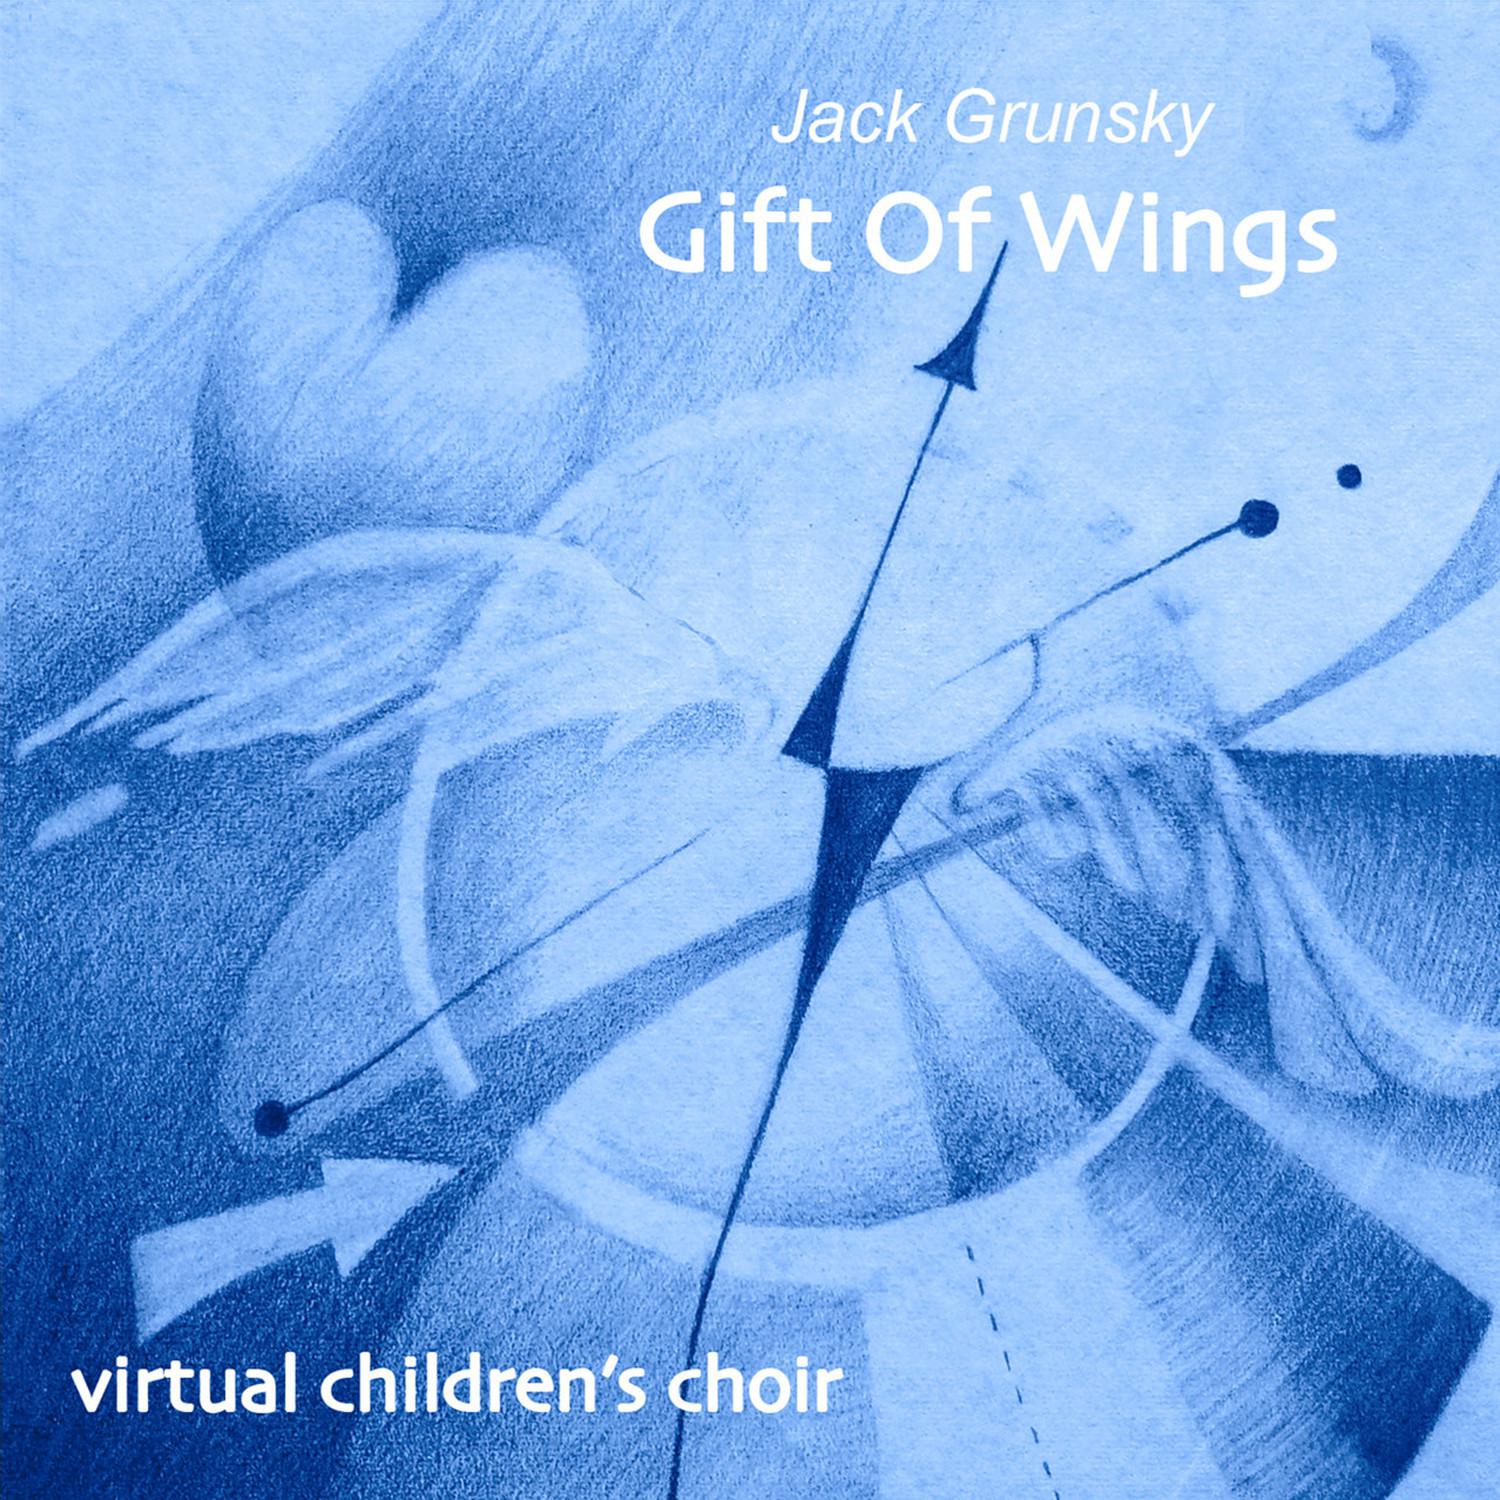 gift of wings - virtual children"s choir